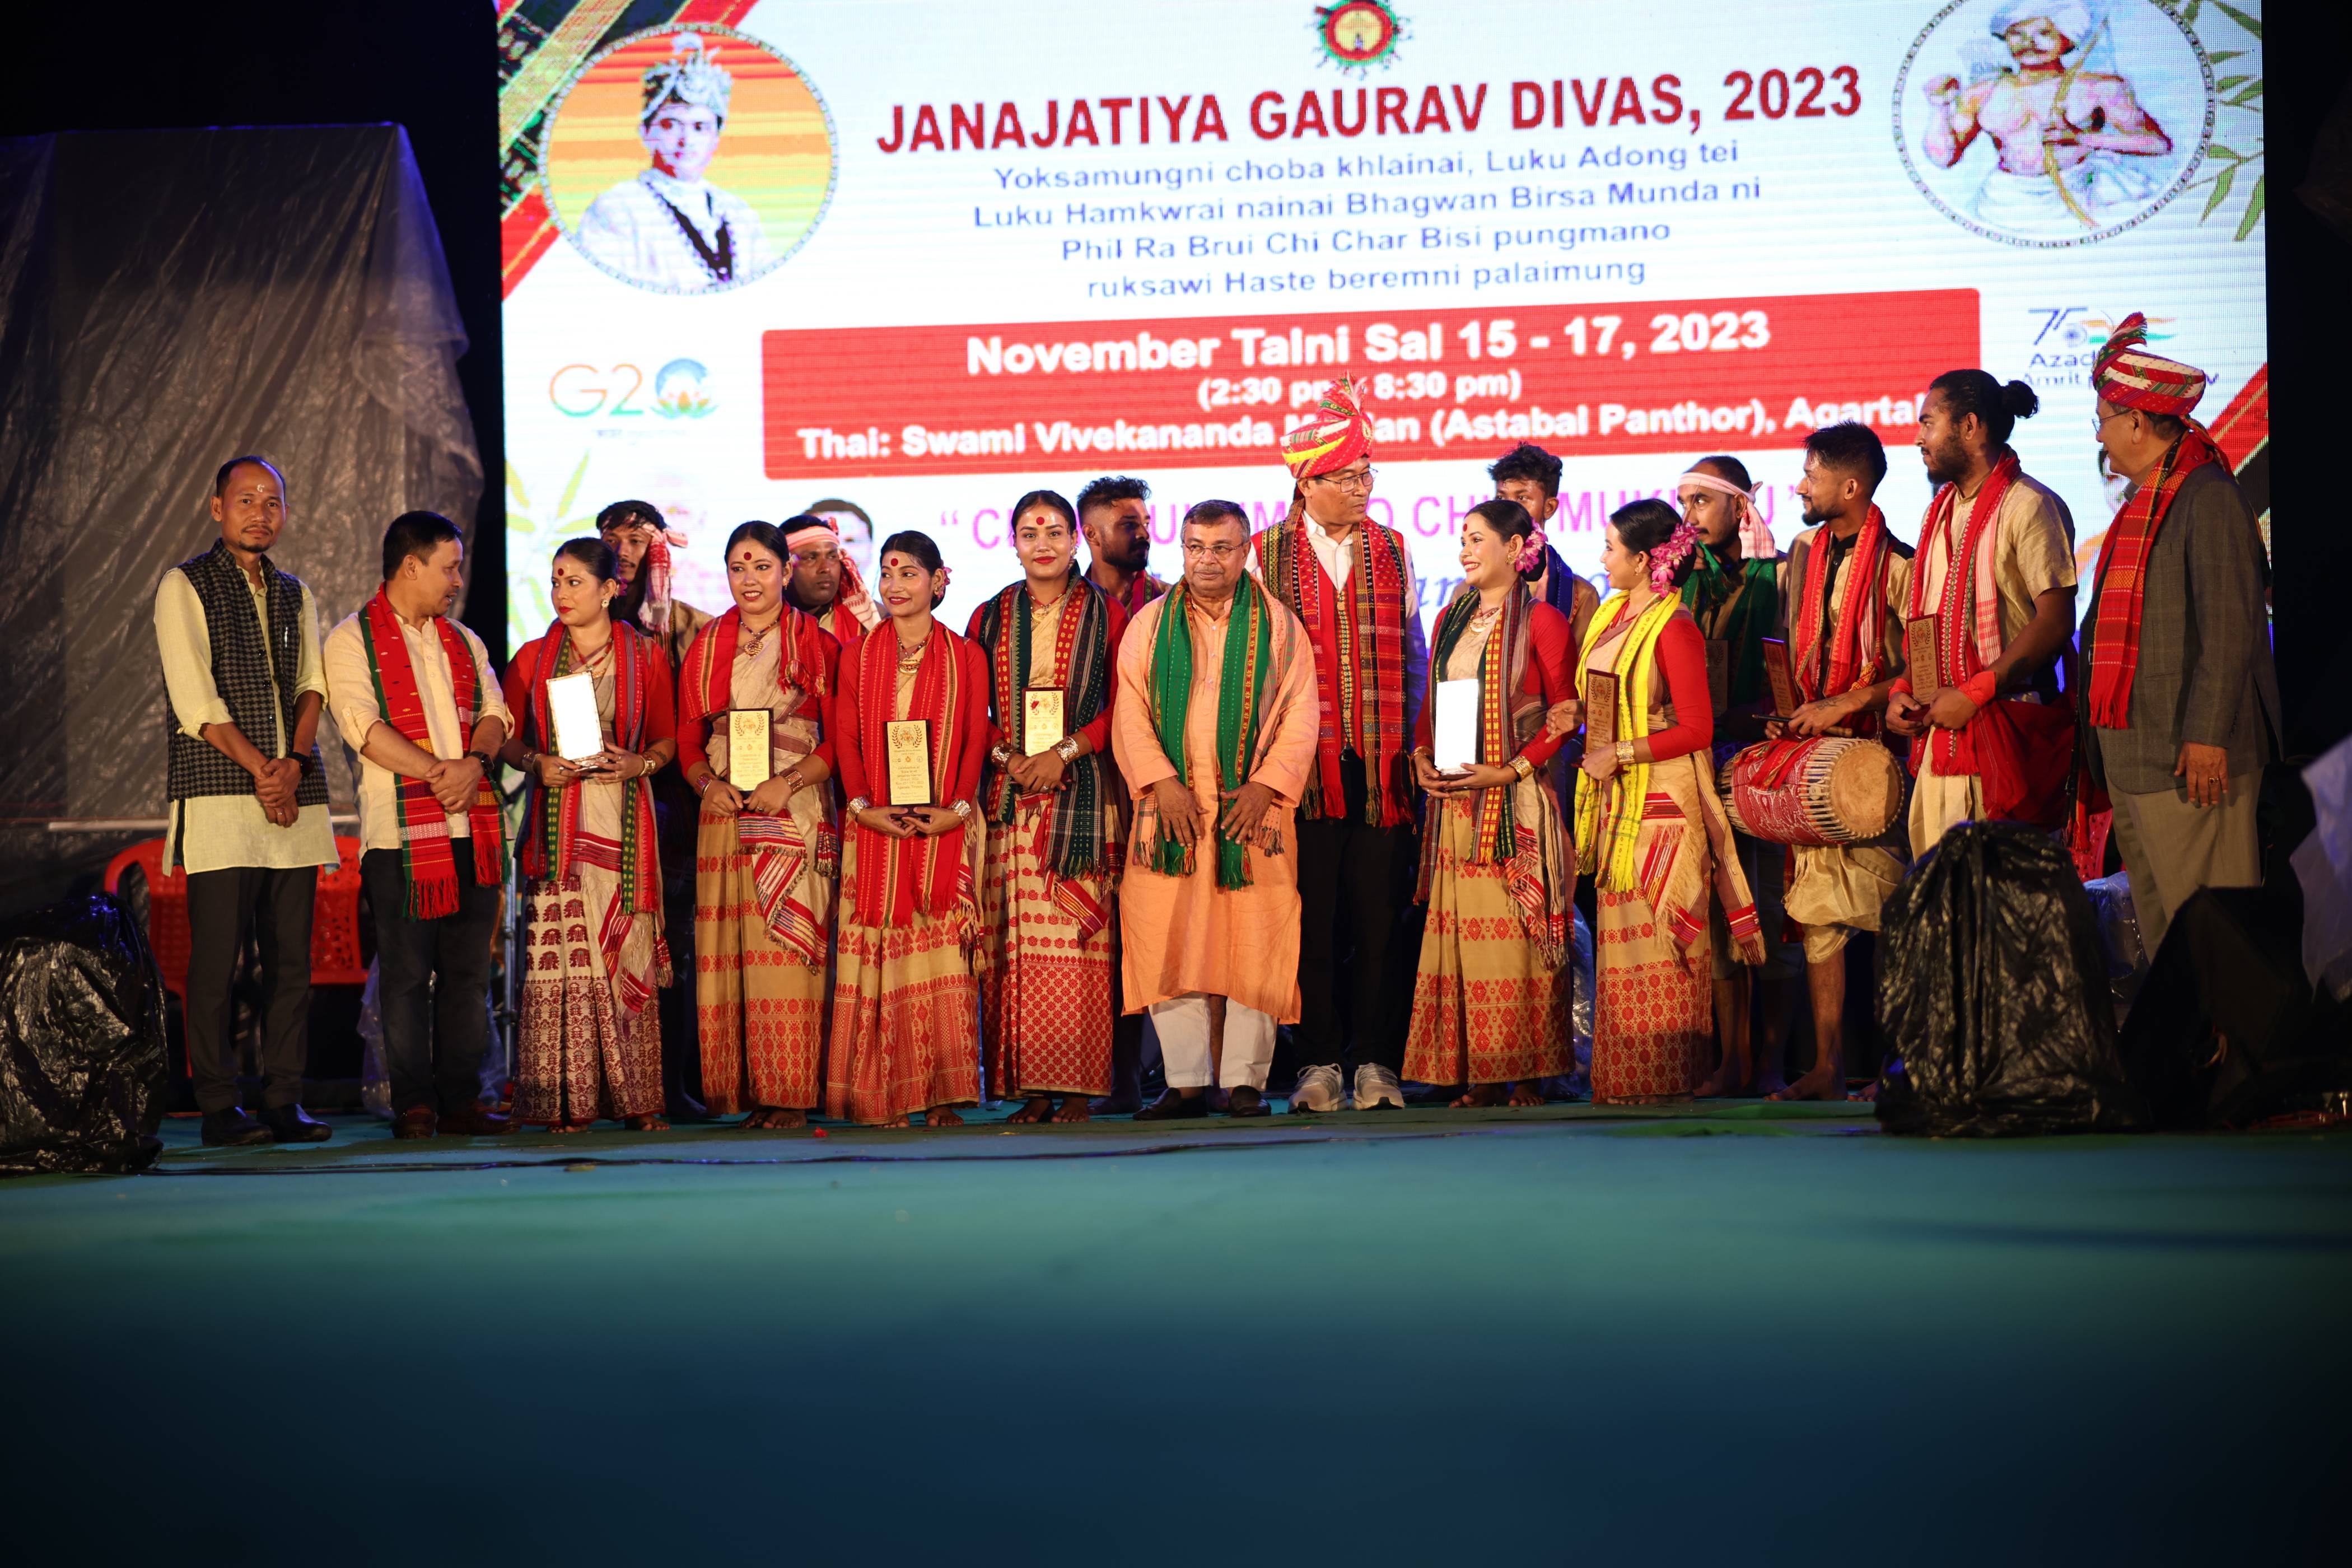 Janajatiya Gaurav Divas, 2023